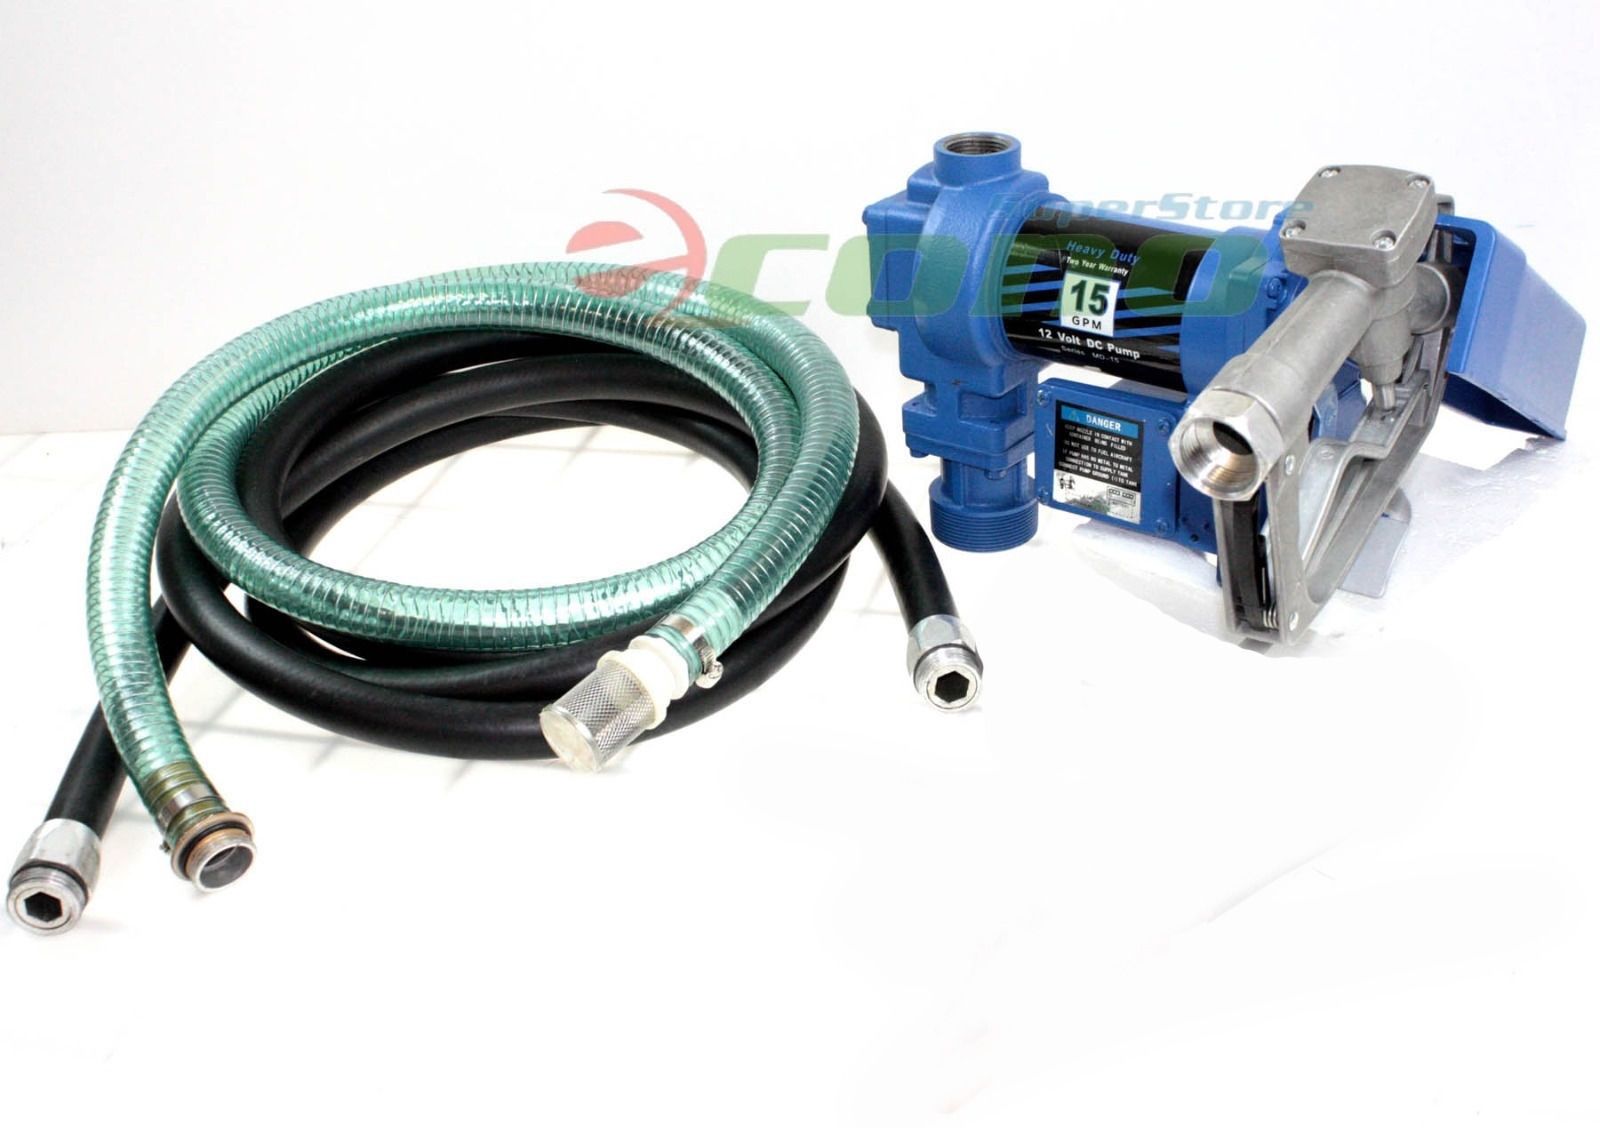 Fuel Transfer Pump 12 V 20 GPM Diesel Gas Gasoline Kerosene w/ Nozzle Kit WINIT 